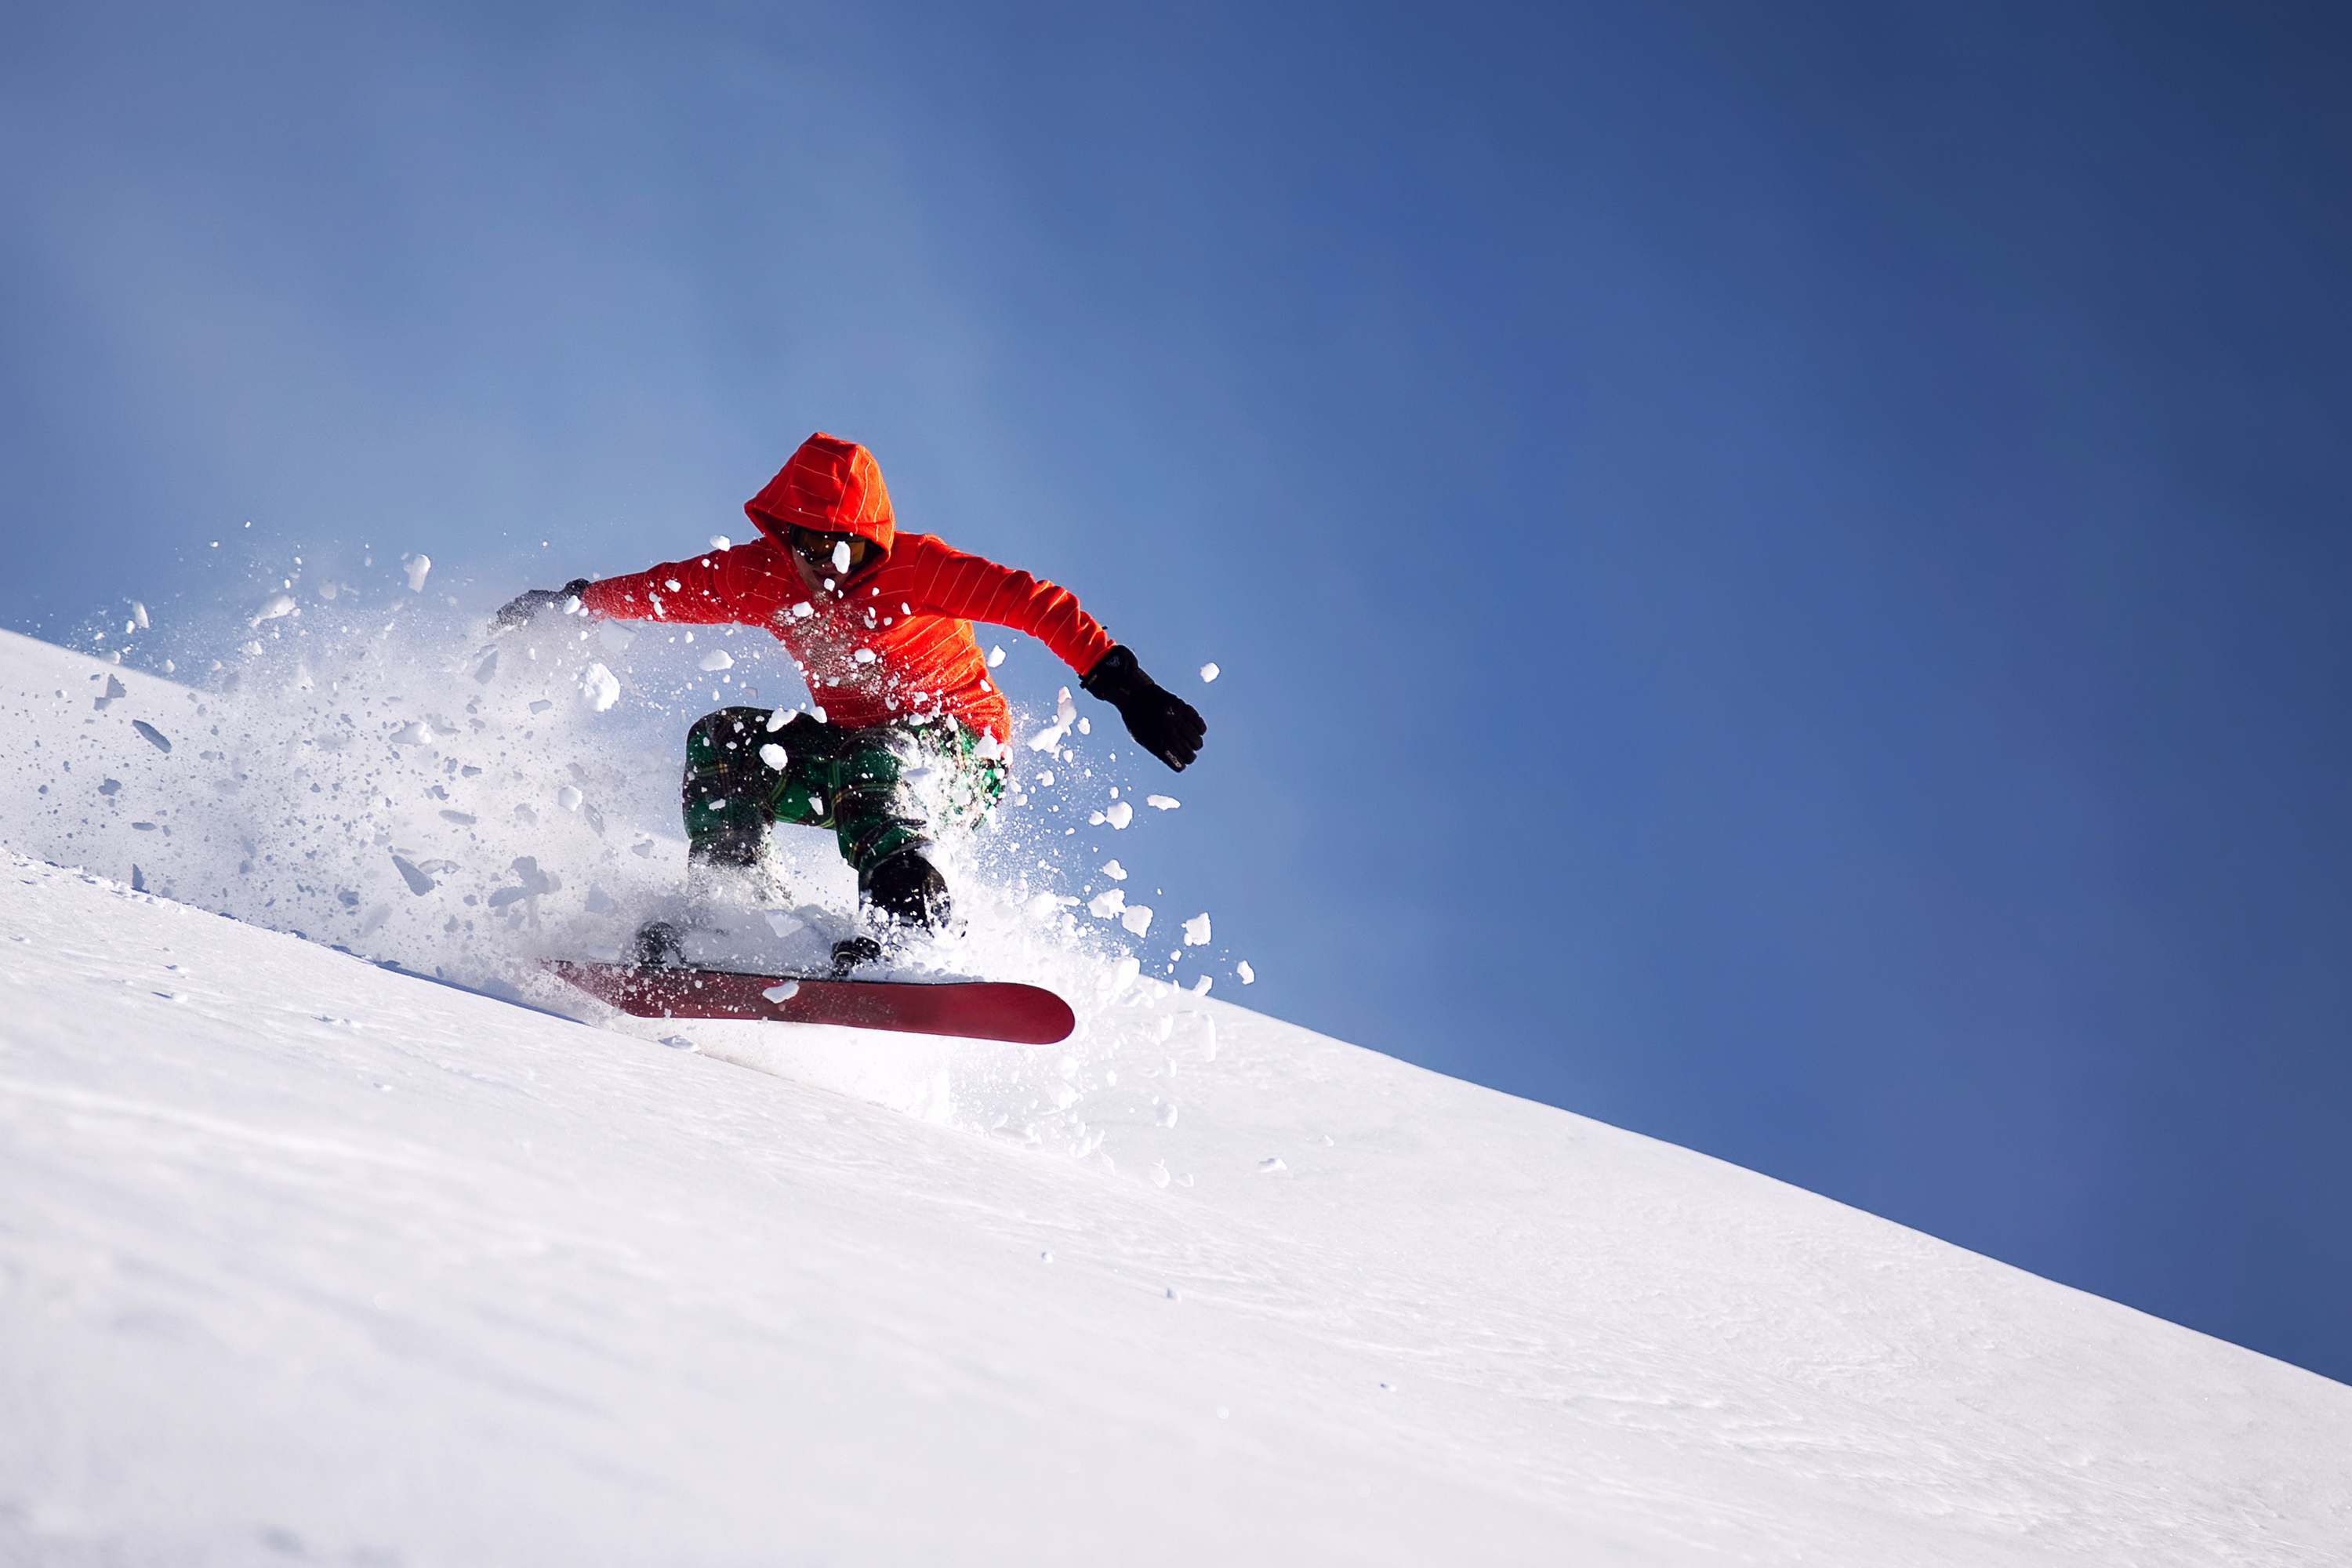 Descarga gratuita de fondo de pantalla para móvil de Nieve, Snowboard, Deporte.